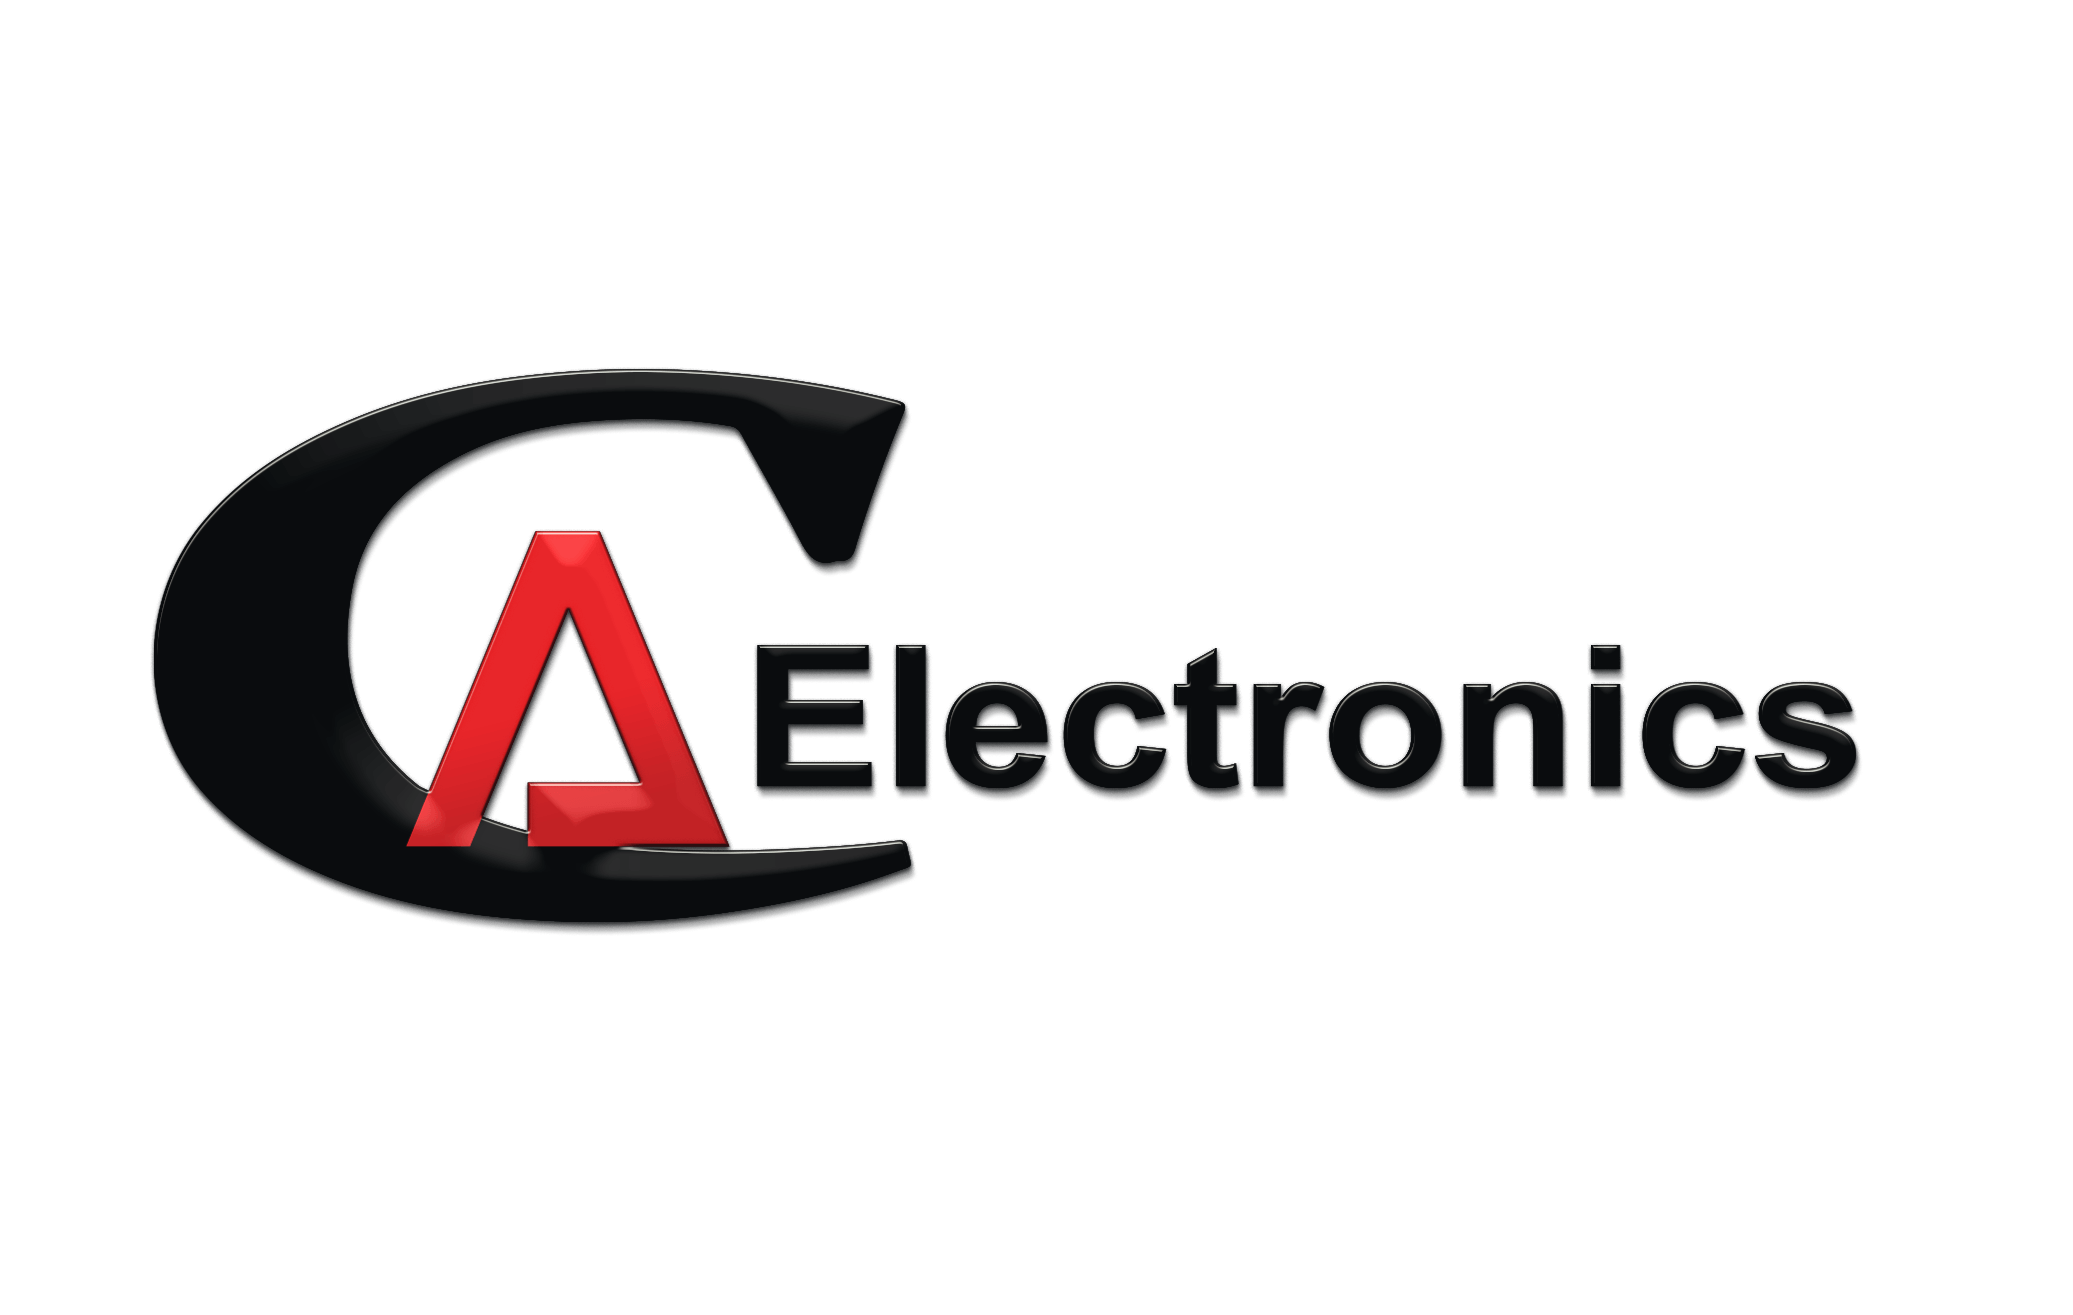 Electronic Store Logo - C&A Electronics Inc